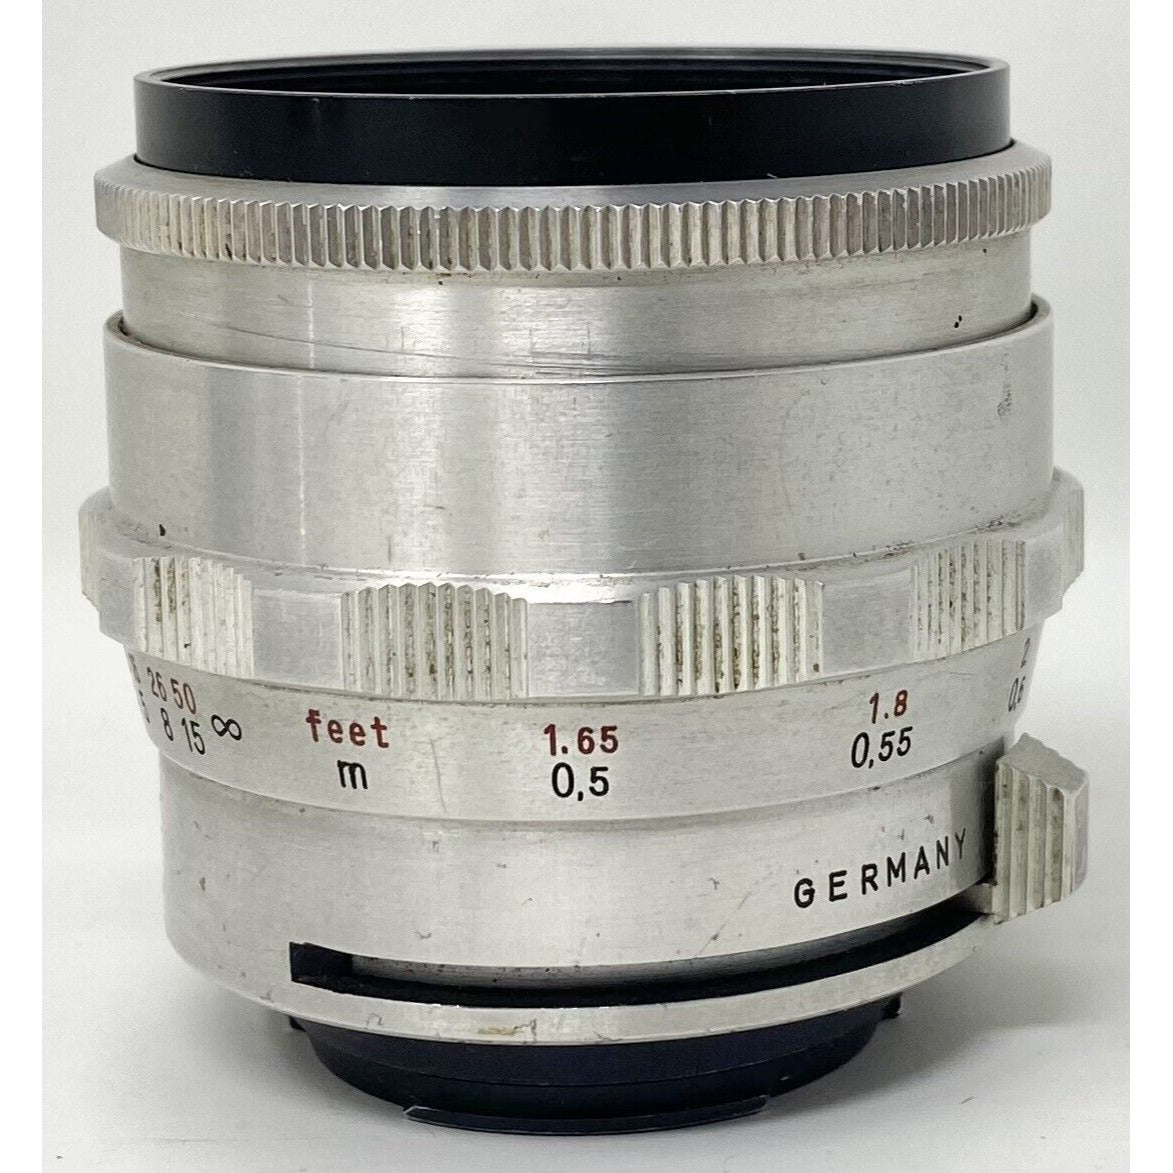 UNTESTED - IHAGEE Exakta Varex IIb SLR 35mm Camera + Carl Zeiss Jena 2/58 T Lens